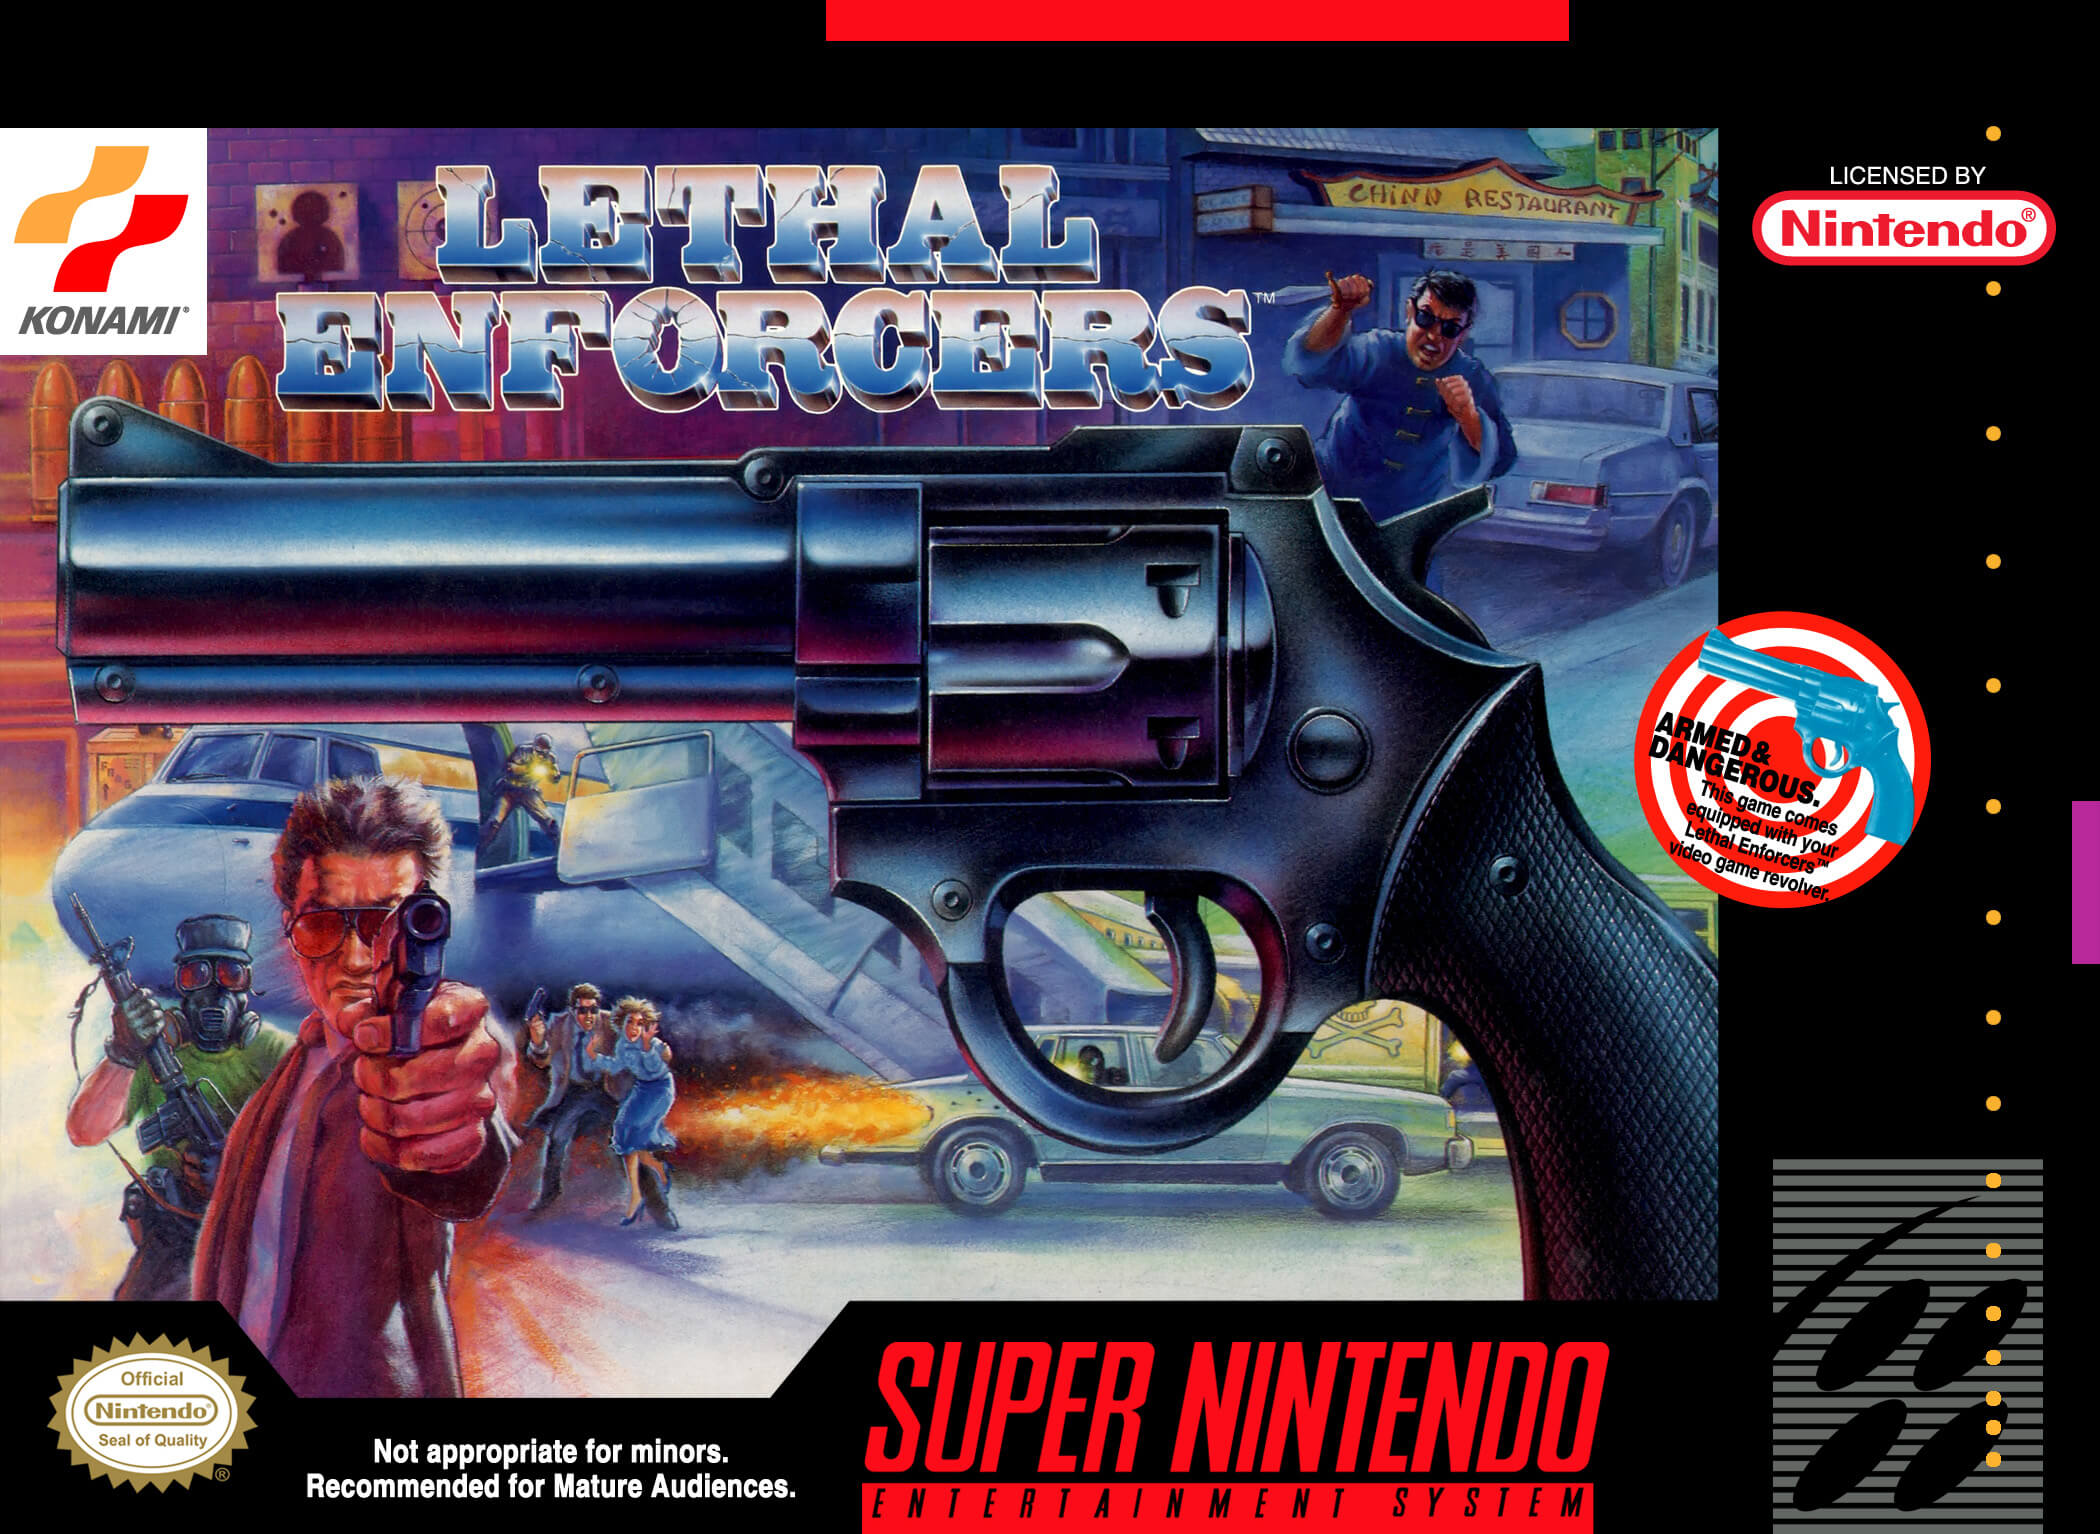 Lethal company gun. Lethal Enforcers Snes. Lethal Enforcers Sega. Lethal Enforcers super Nintendo Cover. Lethal Enforcers 2 Sega.